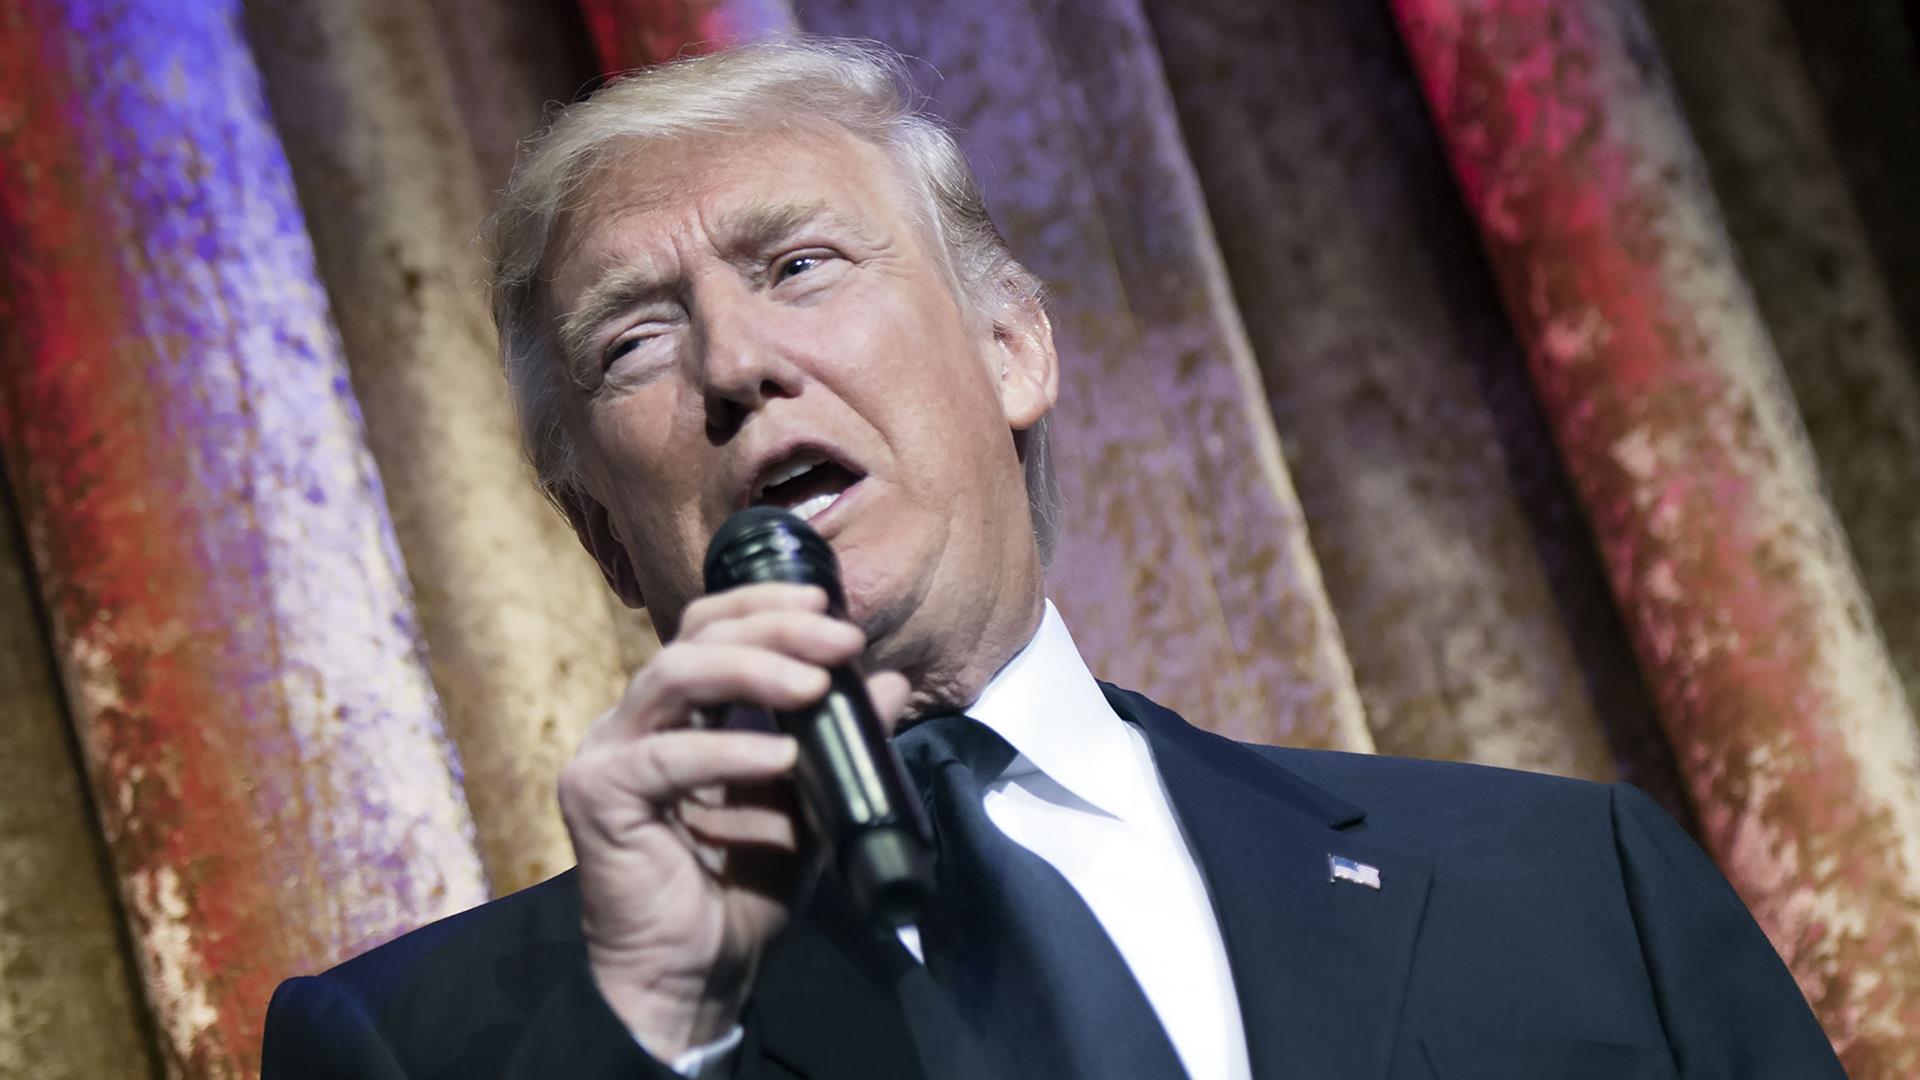 More than 50 Democratic lawmakers plan to boycott Donald Trump inauguration